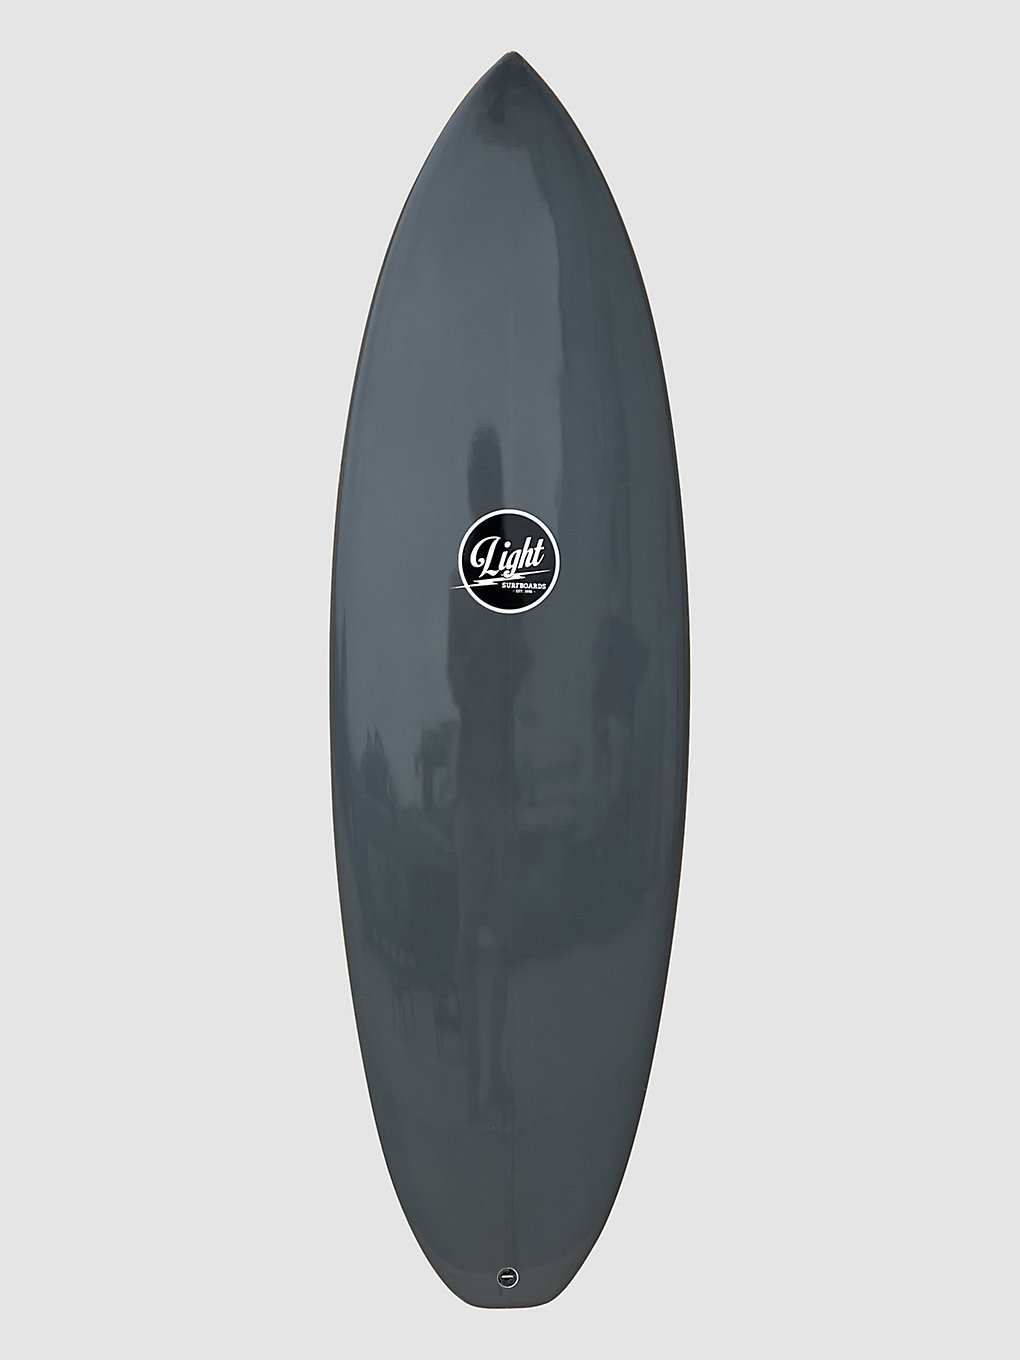 Light River Resin Grey PU Future 5'8 Surfboard patroon